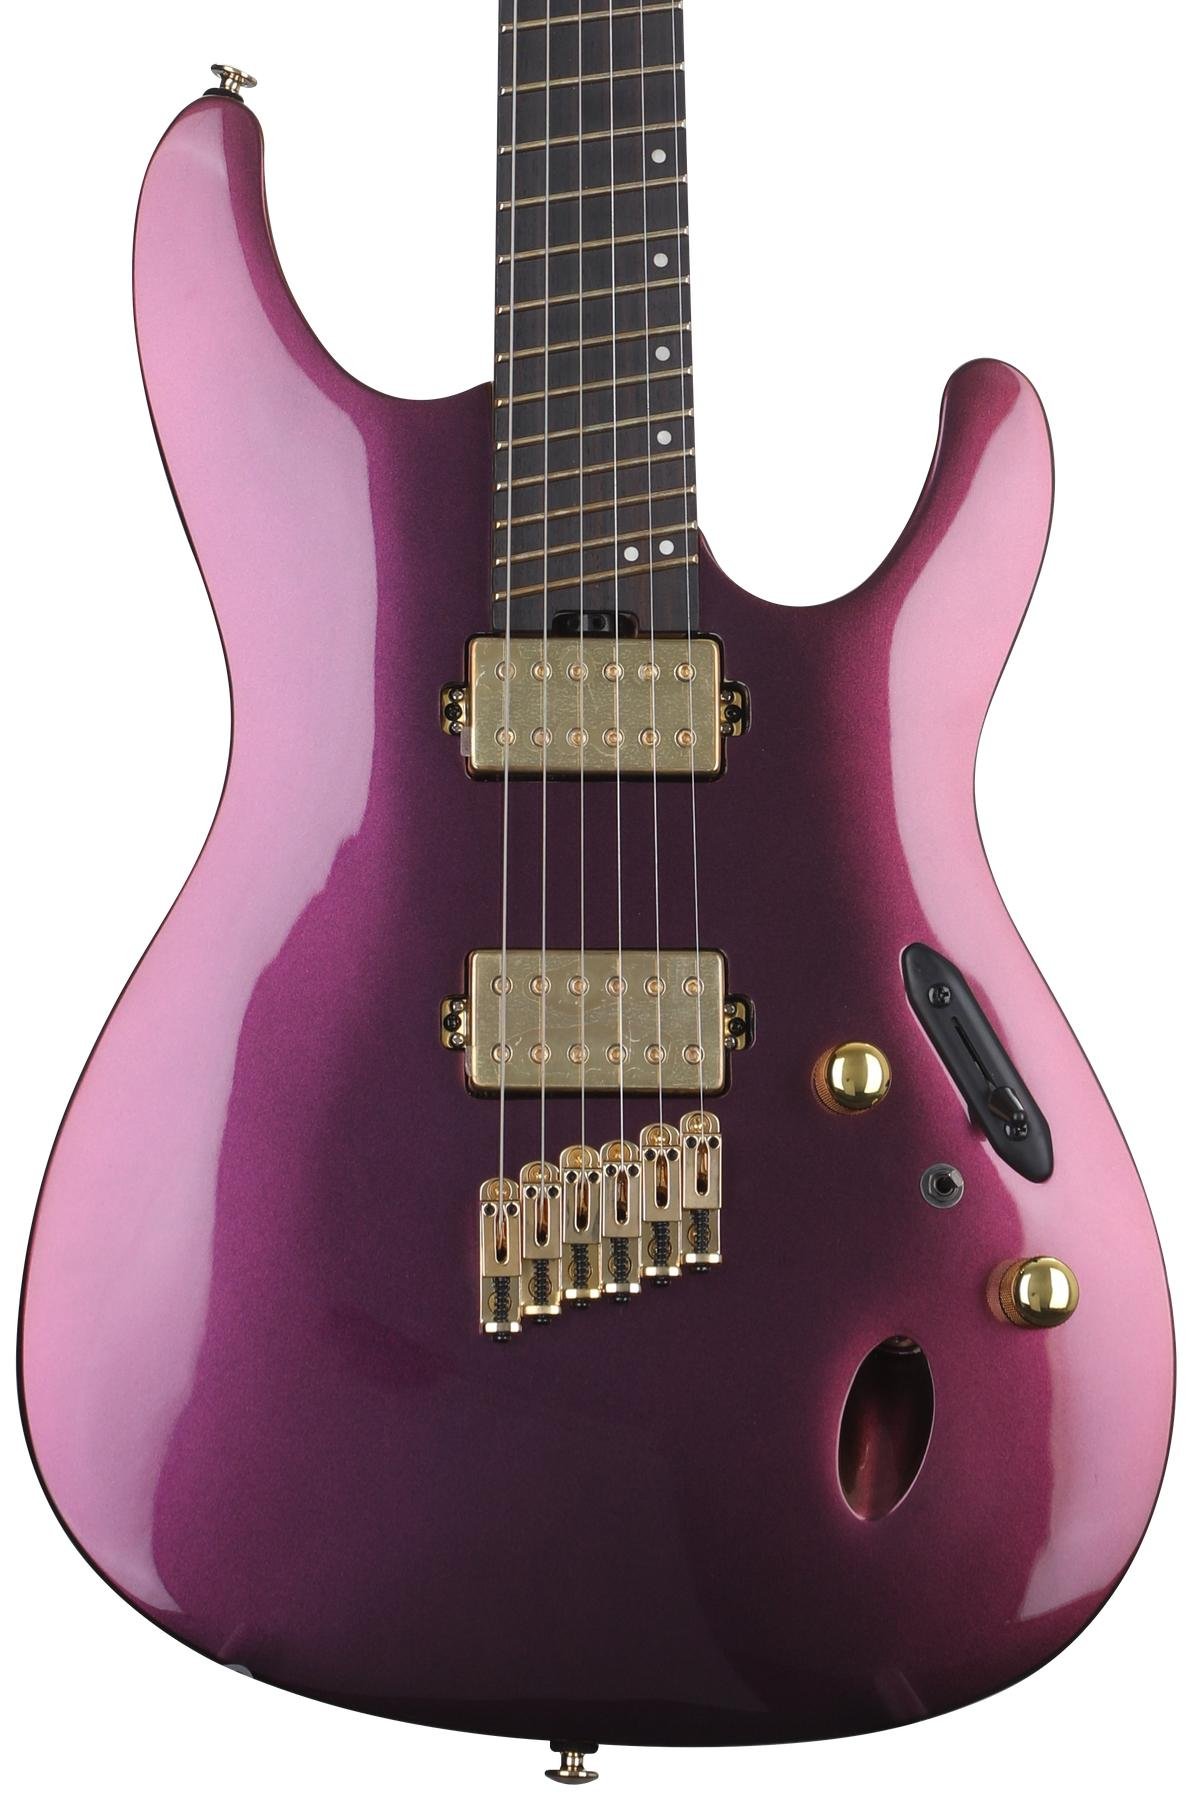 Ibanez SML721 Electric Guitar Review - Premier Guitar